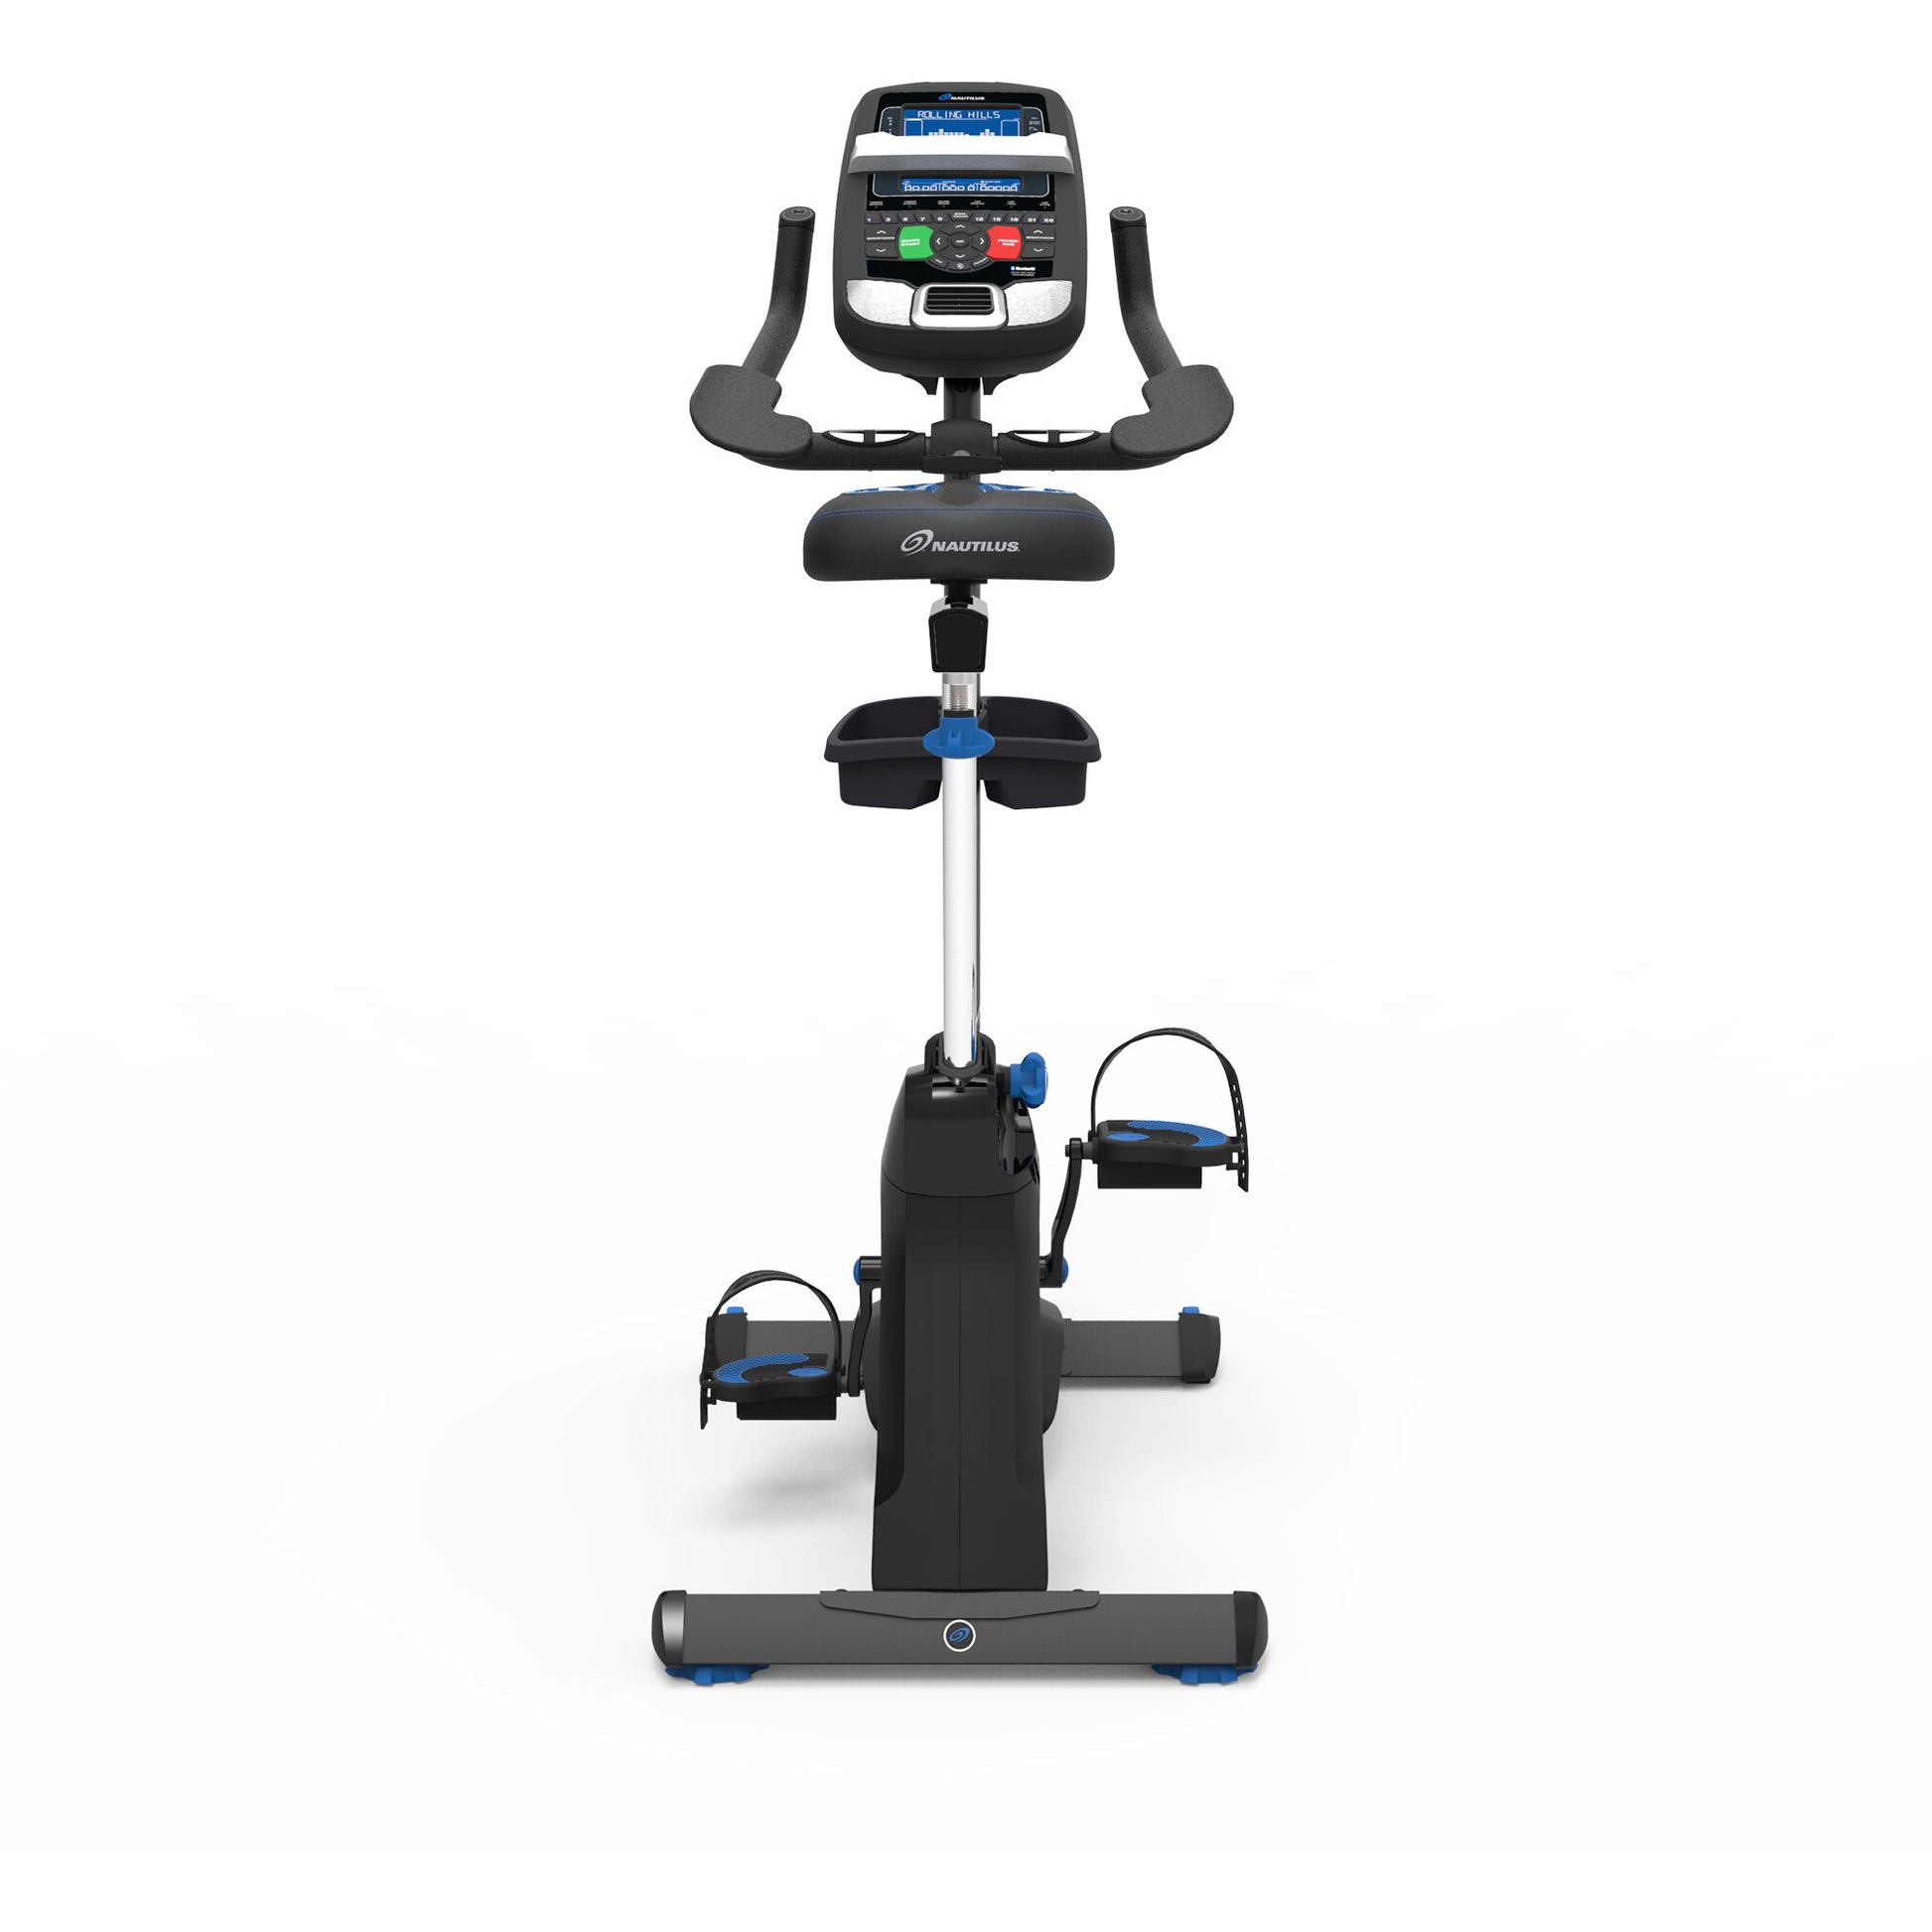 Health & Fitness - Exercise & Fitness - Cardio - Ellipticals & Exercise  Bikes - Nautilus R618 Recumbent Bike - Online Shopping for Canadians